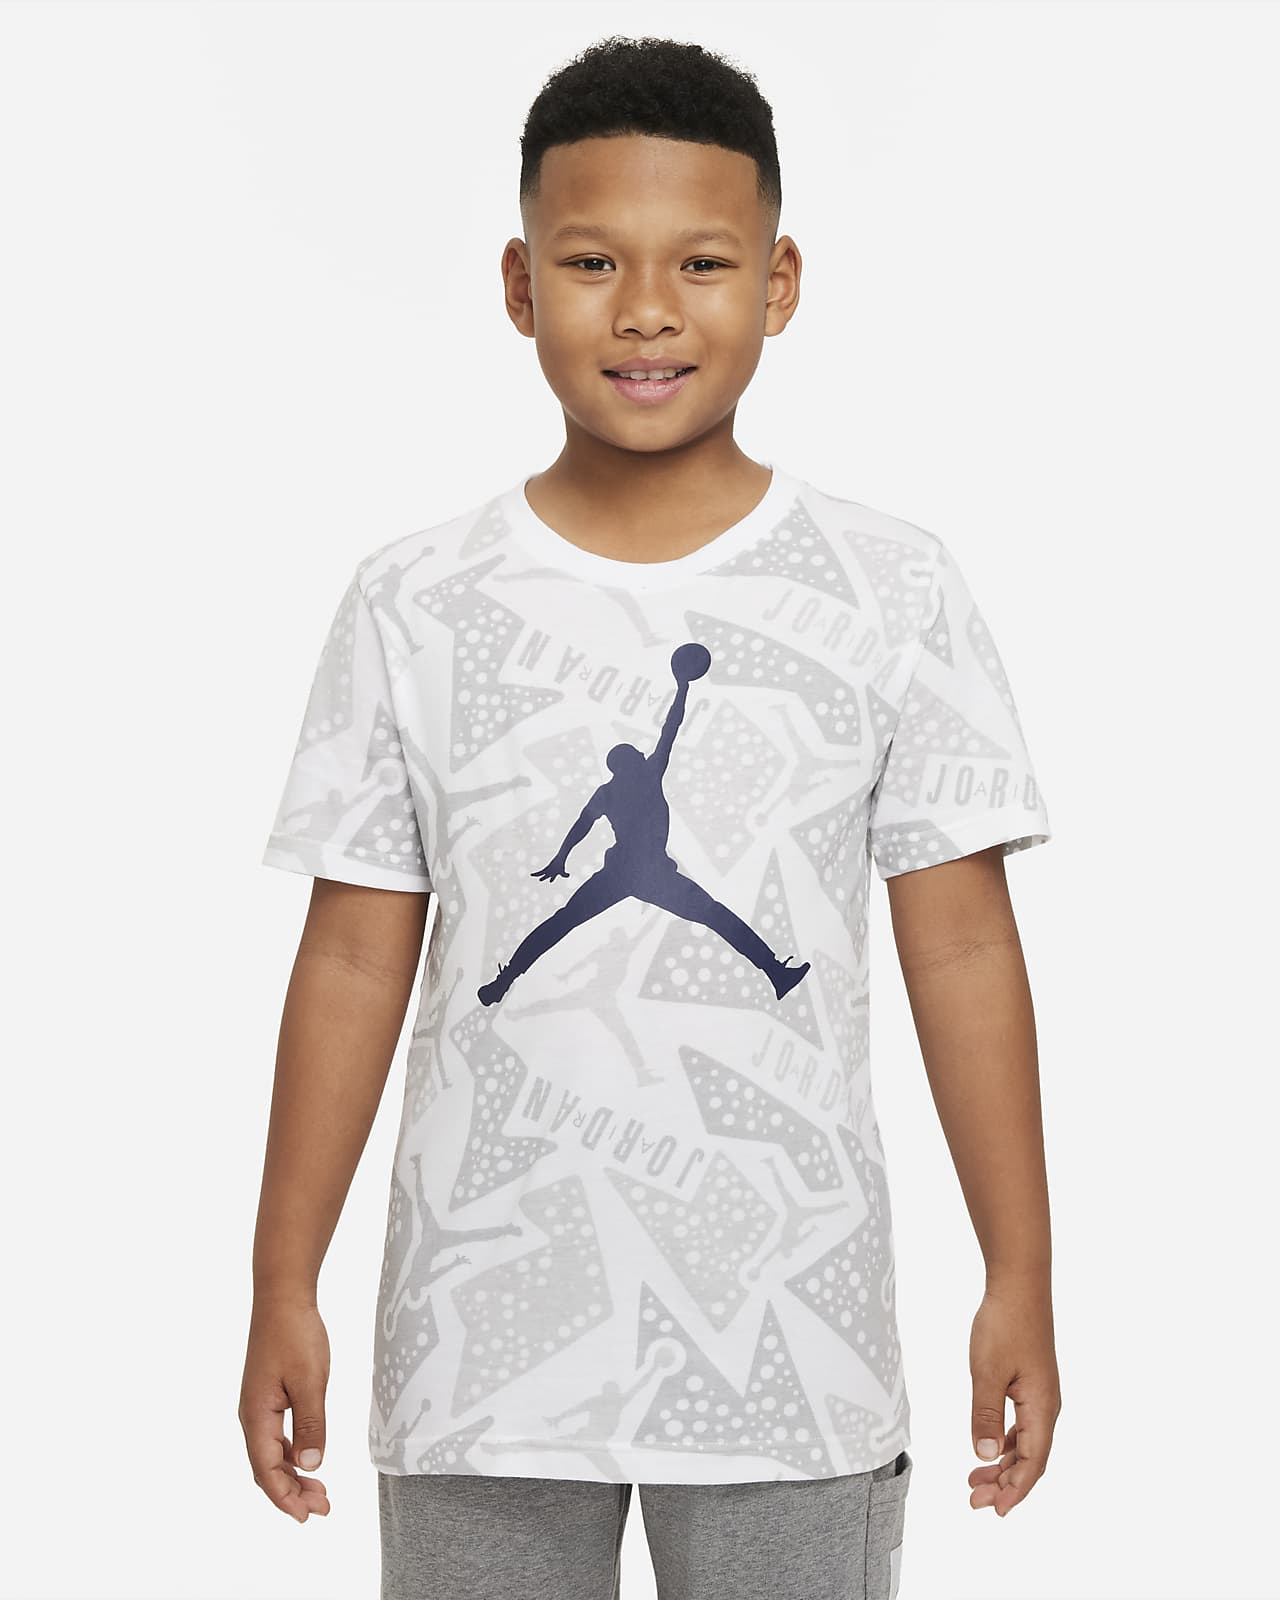 air jordan shirts for kids